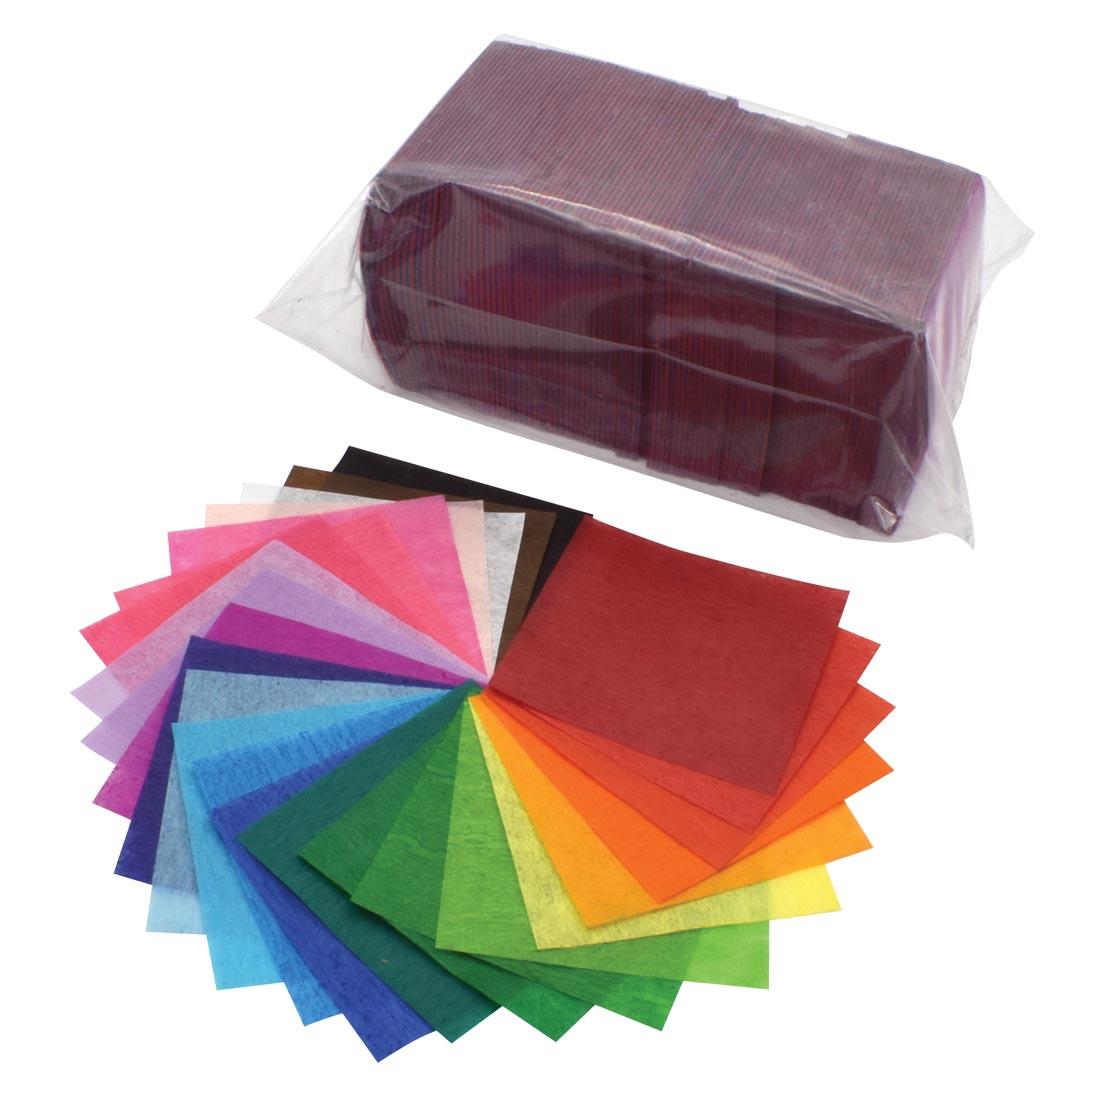 Spectra Bleeding Art Tissue Paper Squares